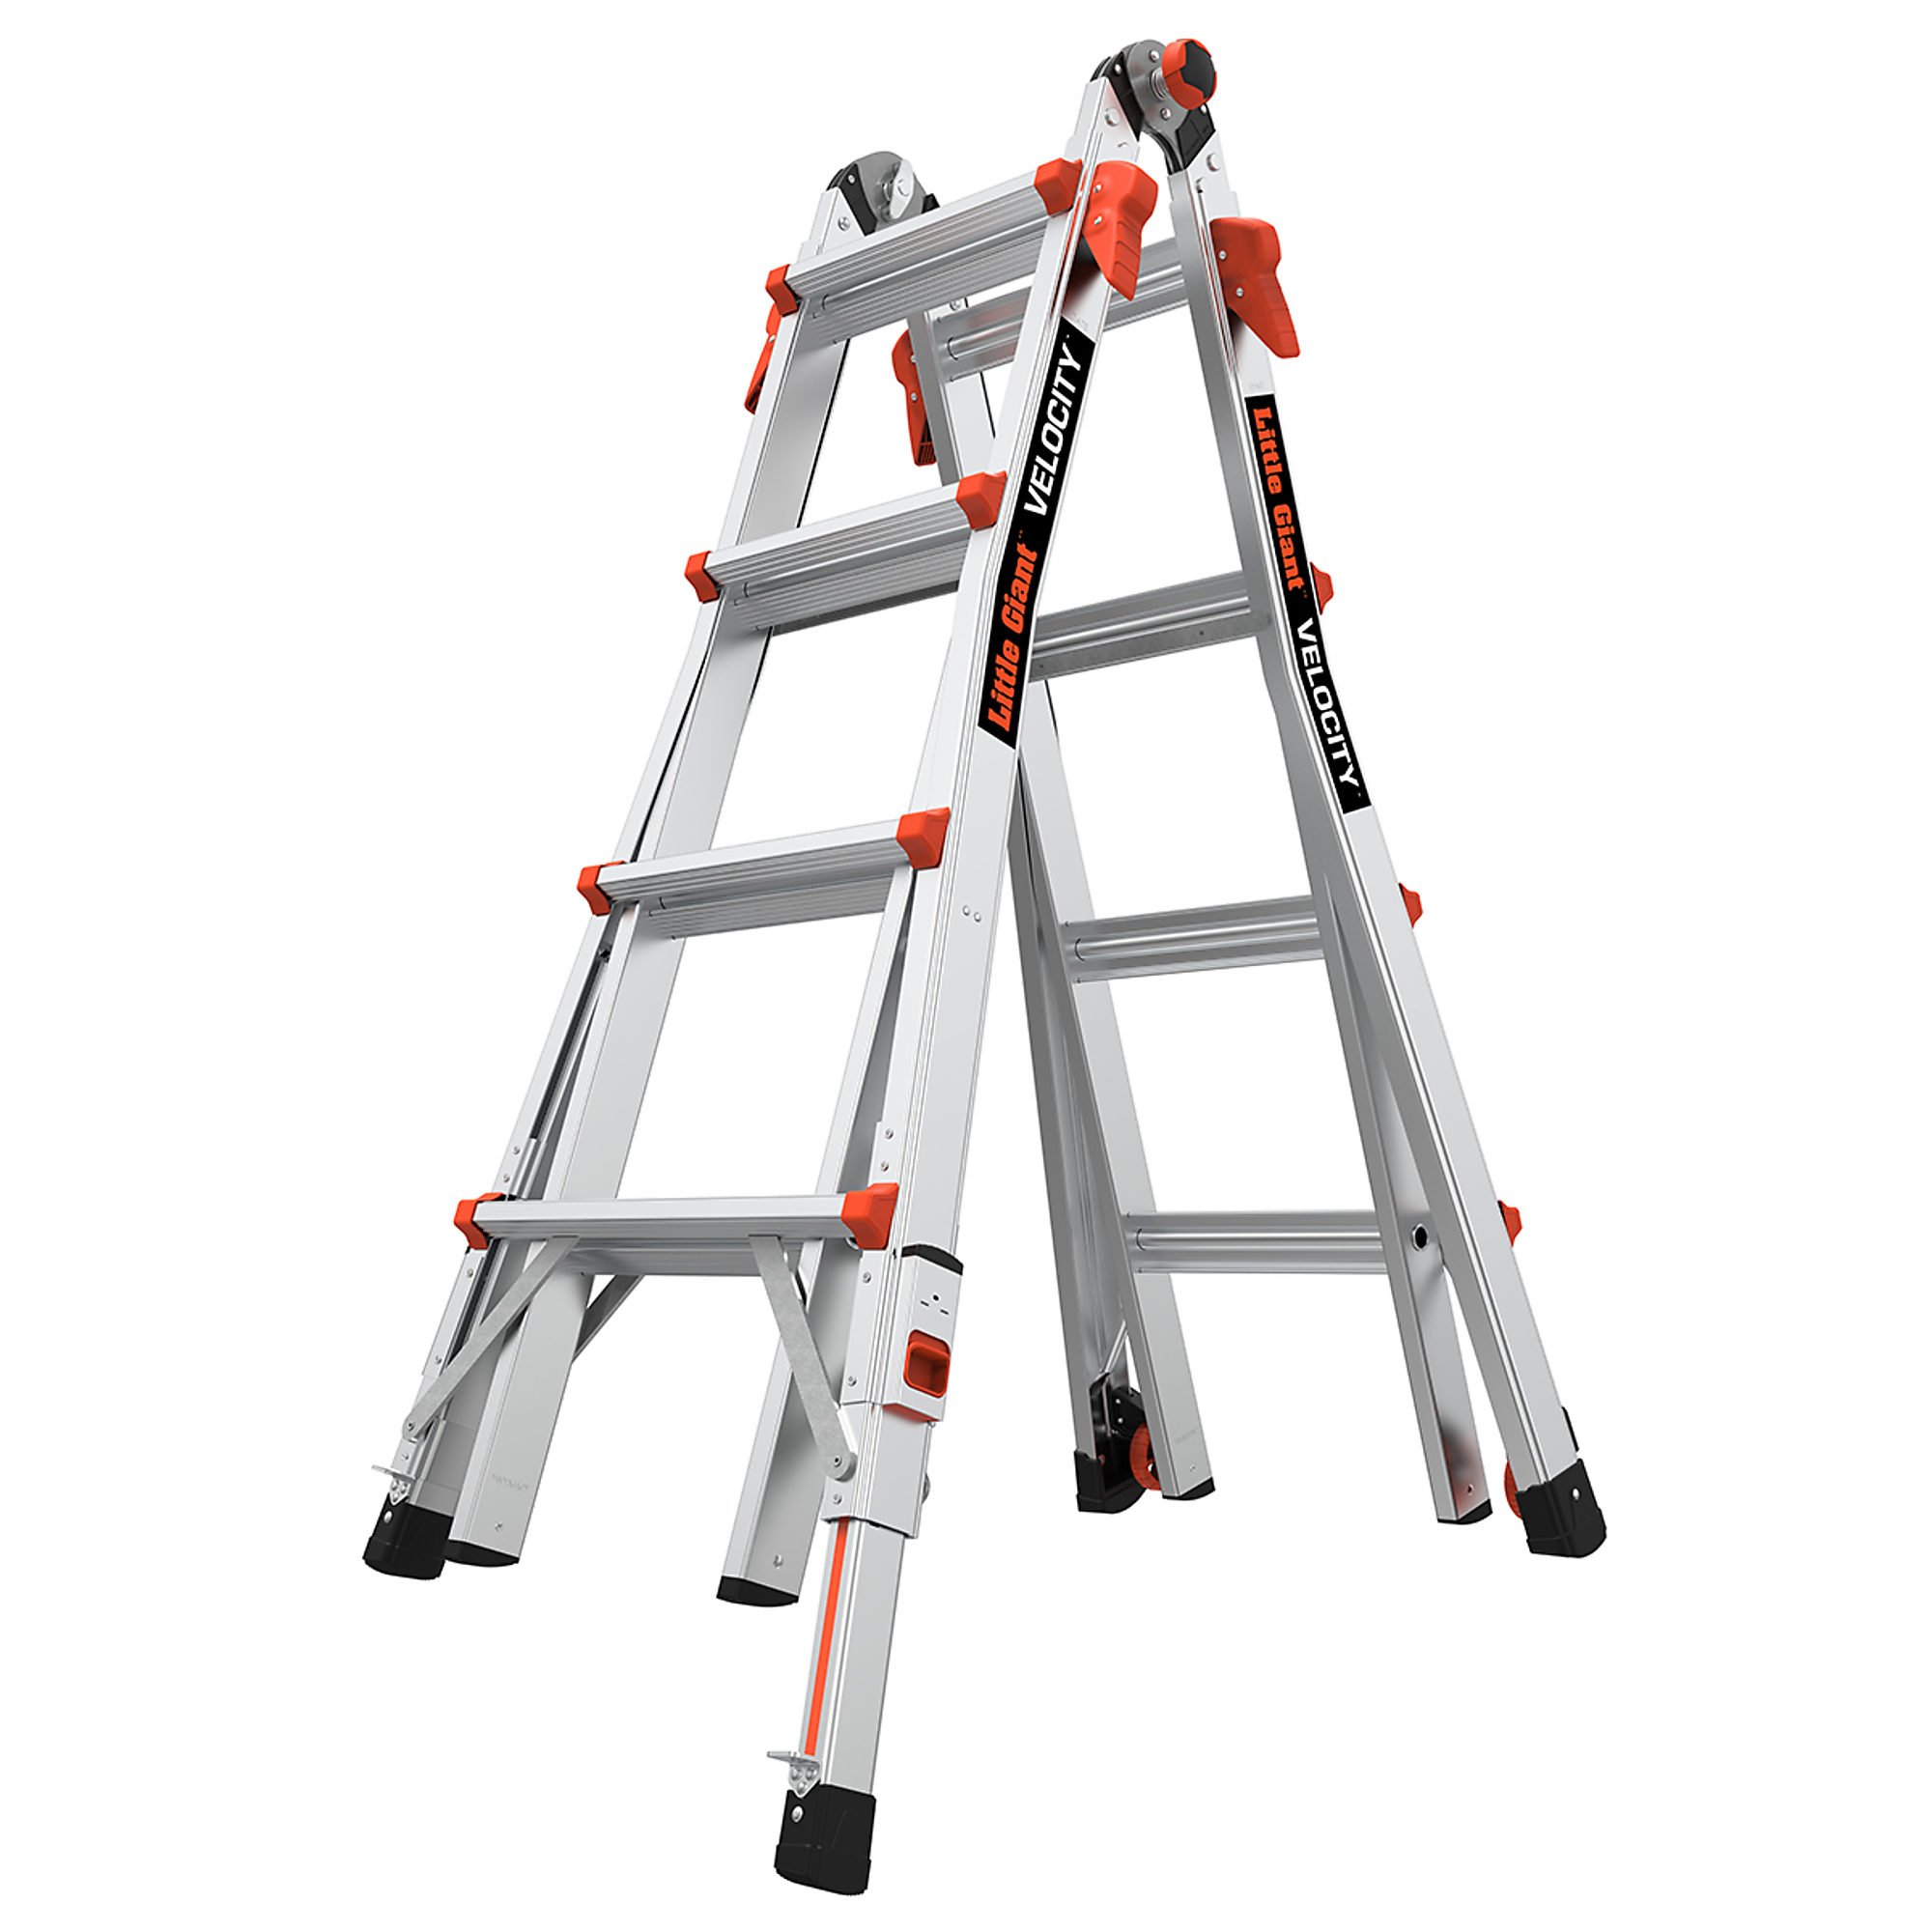 VELOCITY 17 Alum Articulated Ext.Ladder Levelers, Height 17 ft, Capacity 300 lb, Material Aluminum, Model - Little Giant Ladder 15417-801